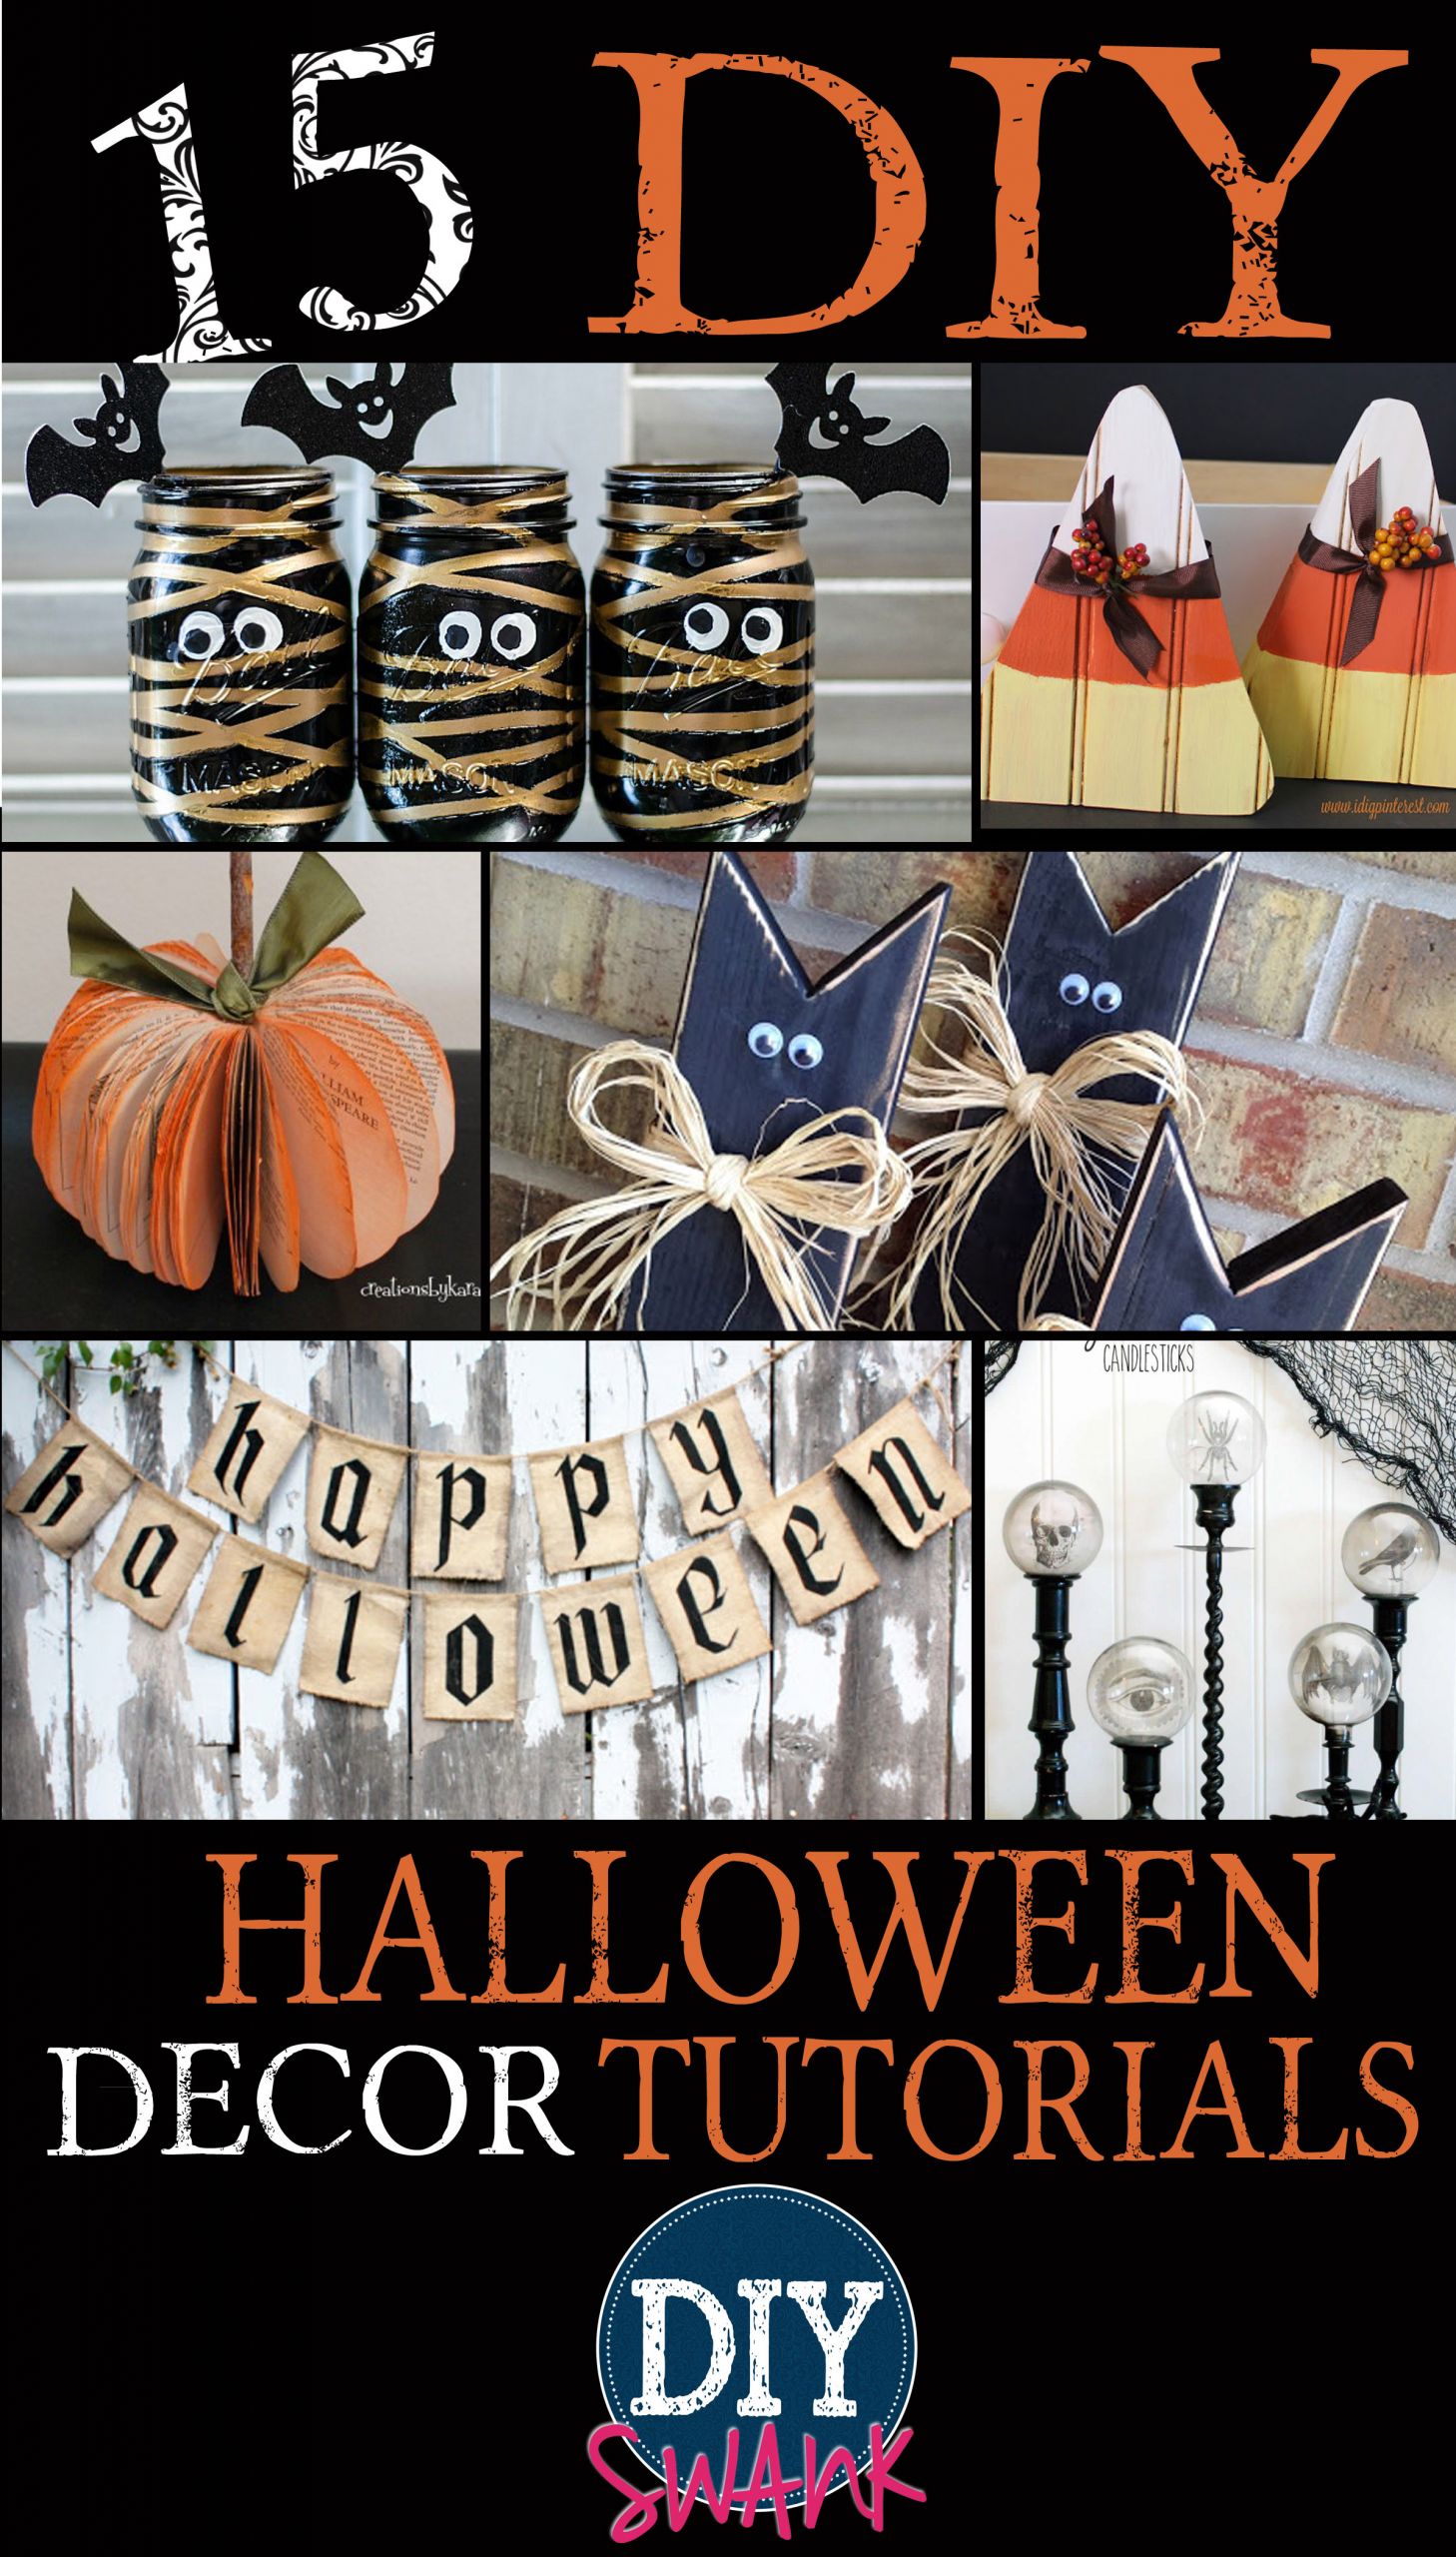 DIY Halloween Home Decor
 15 DIY Halloween Decoration Tutorials — DIY SWANK